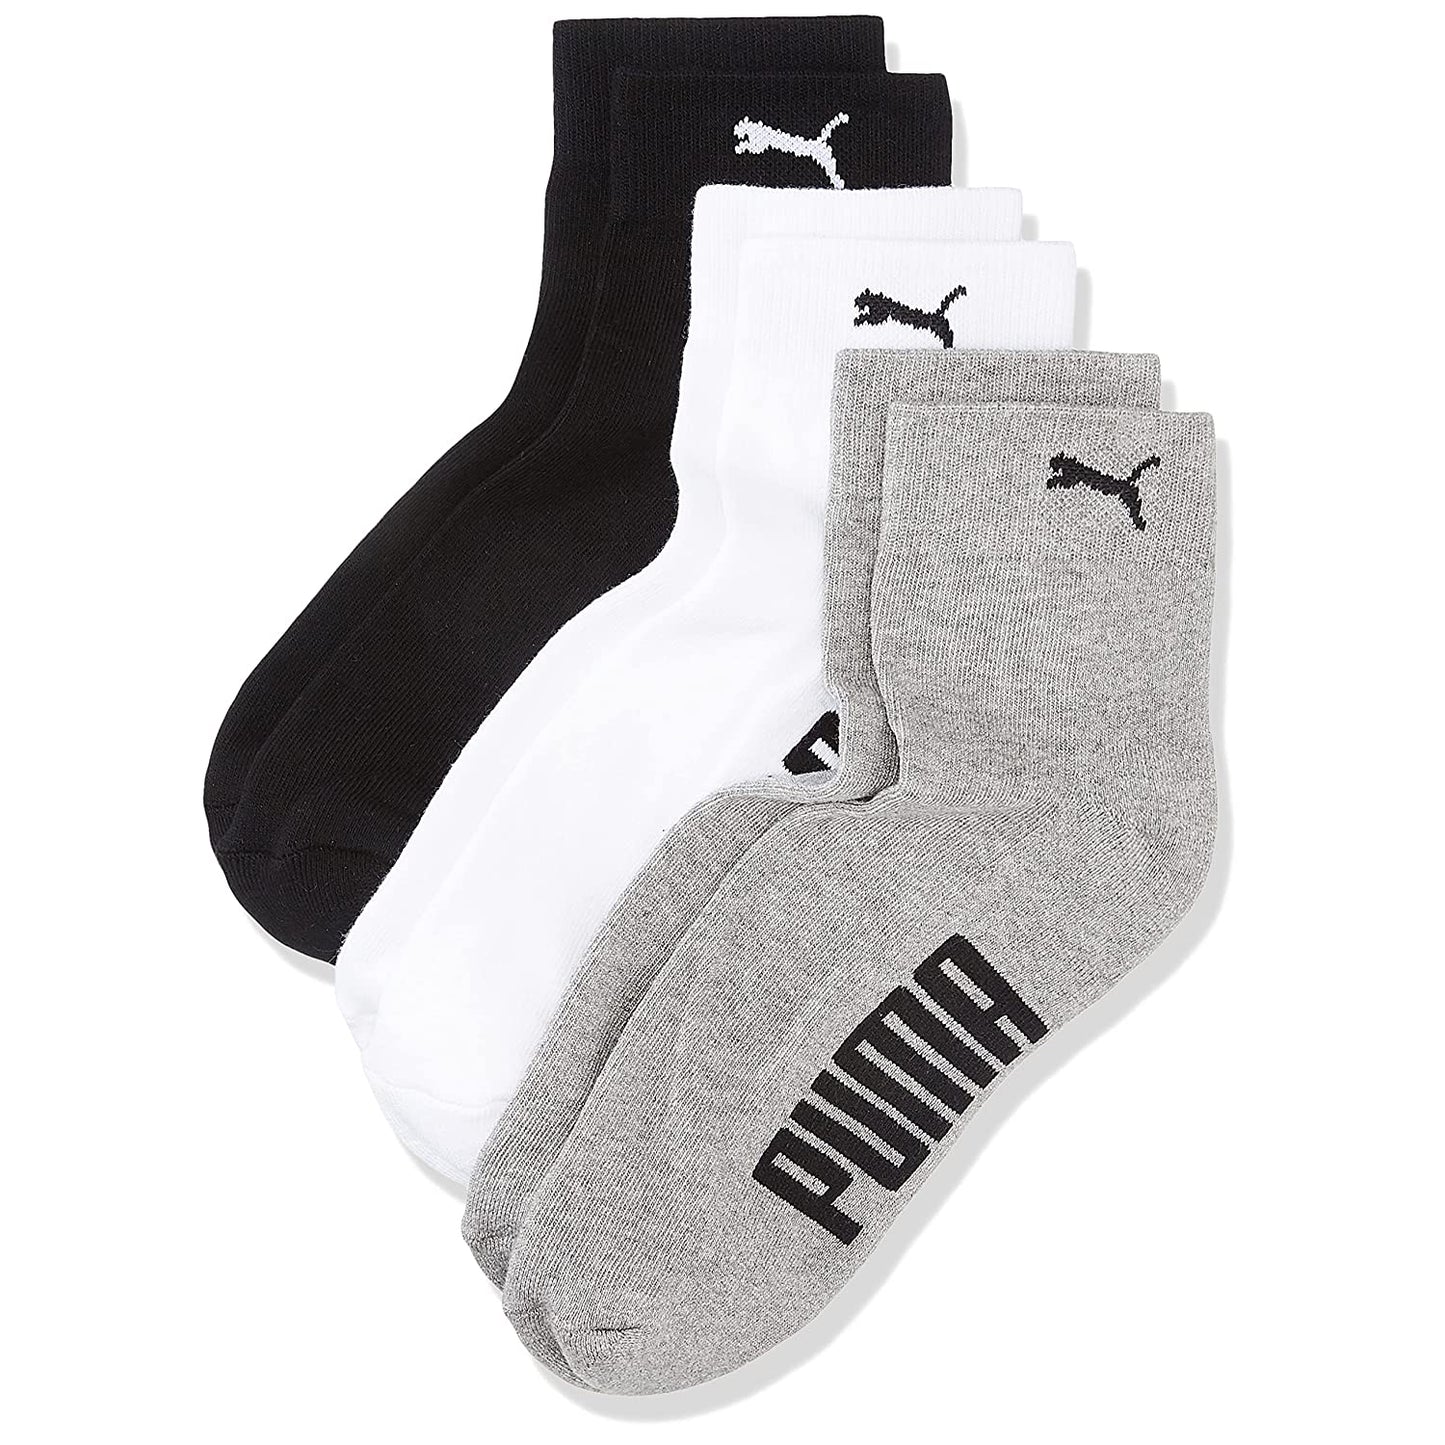 Puma Ankle Length Half Terry Socks, 3 Pairs - Best Price online Prokicksports.com